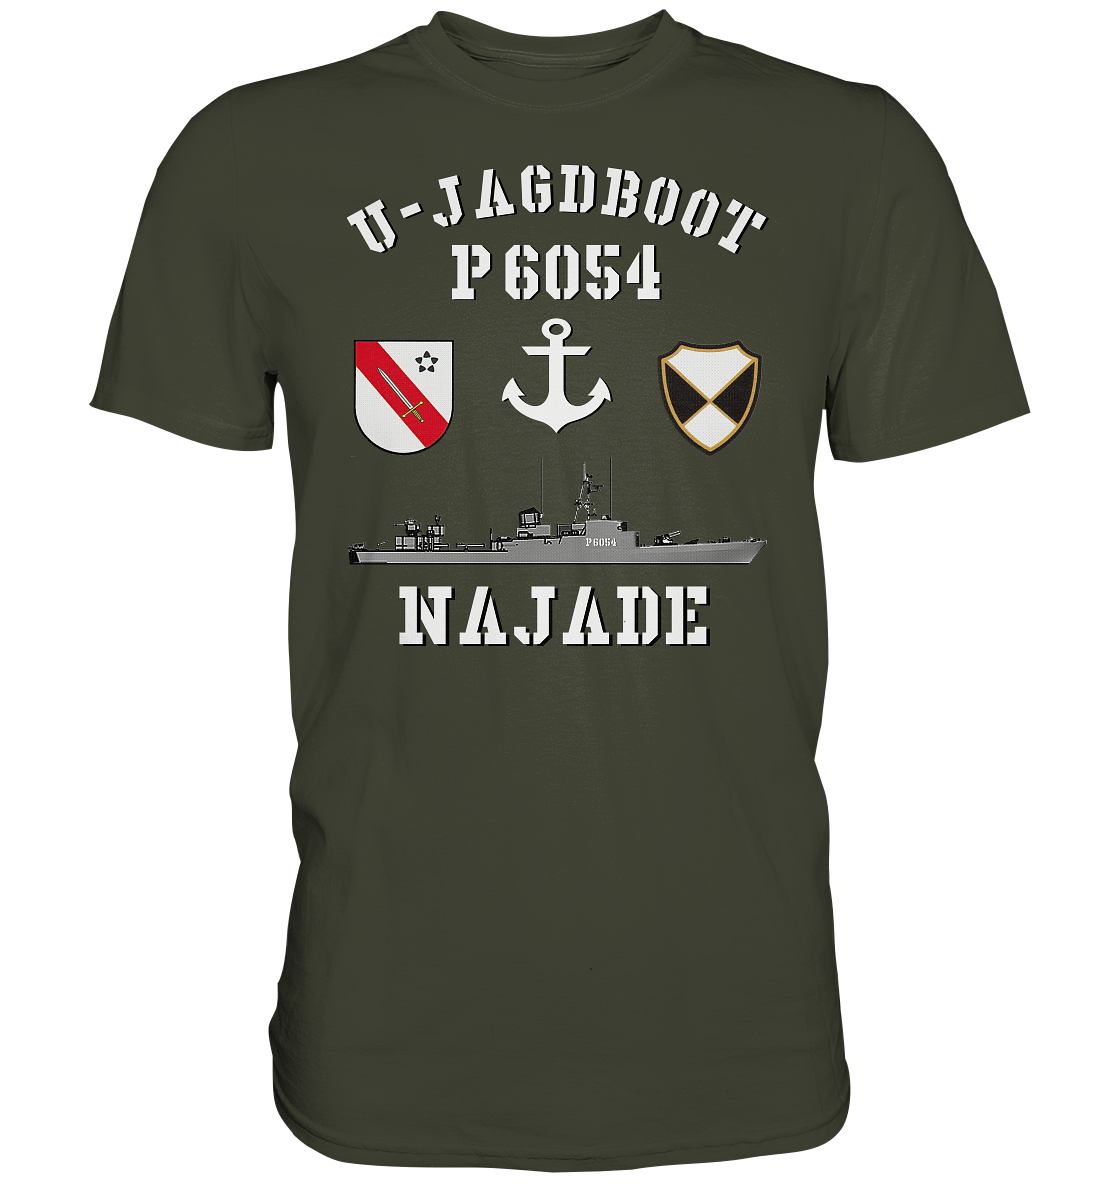 U-Jagdboot P6054 NAJADE Anker - Premium Shirt